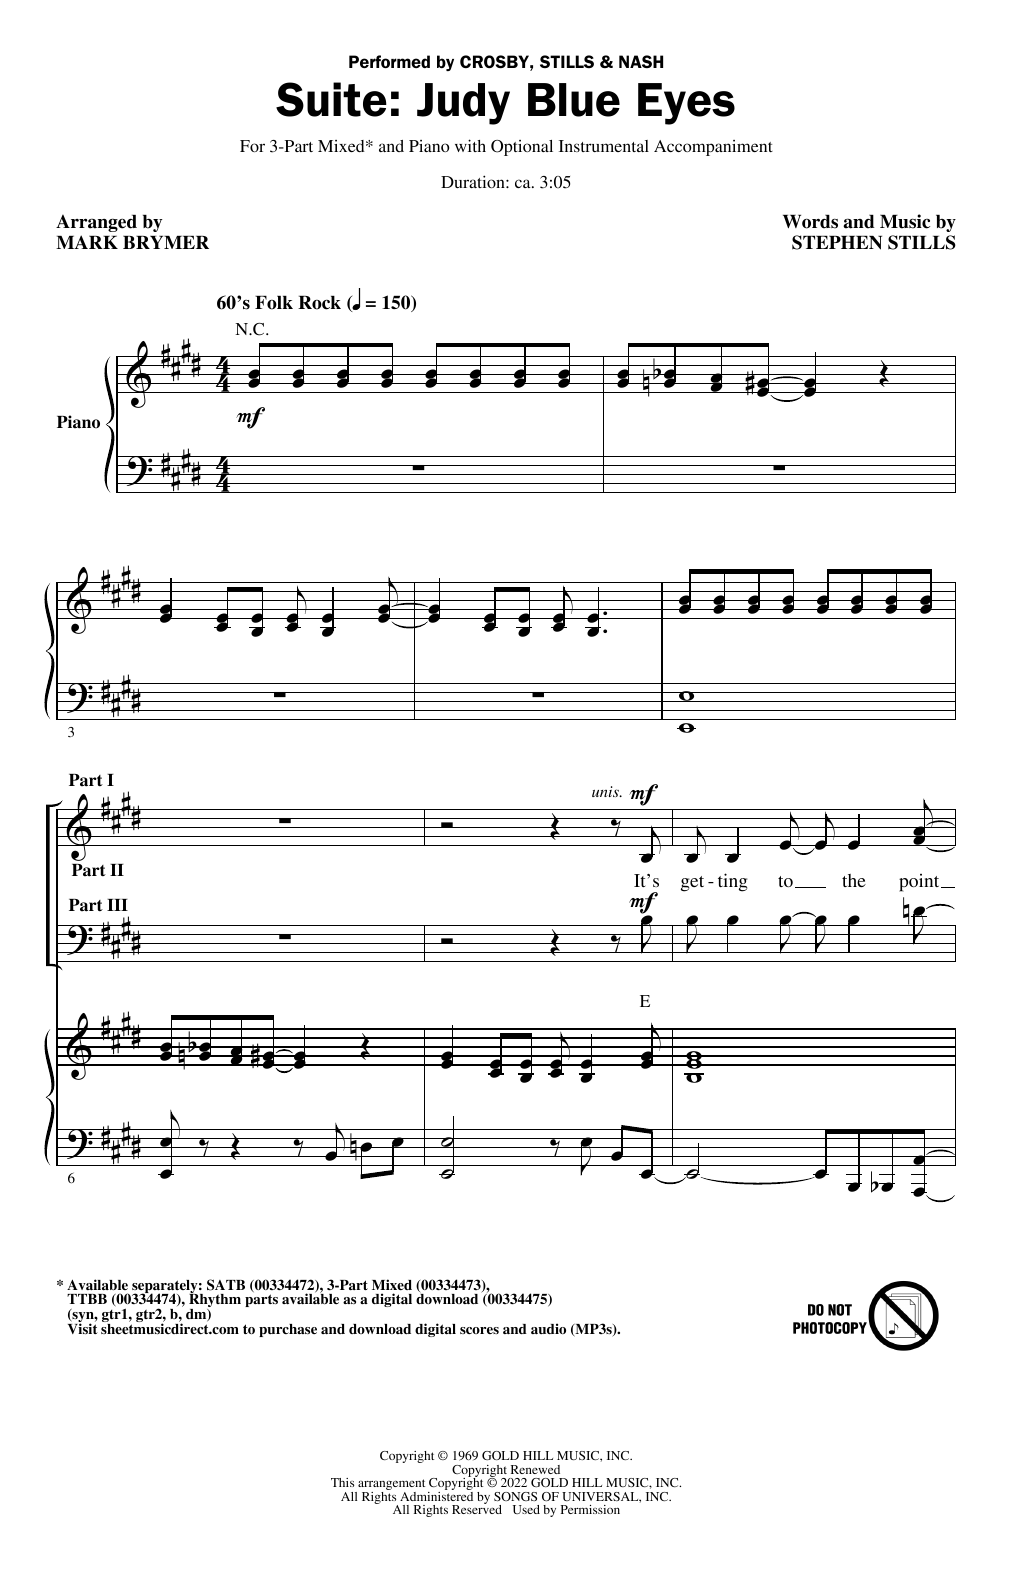 Crosby, Stills & Nash Suite: Judy Blue Eyes (arr. Mark Brymer) sheet music notes and chords arranged for TTBB Choir